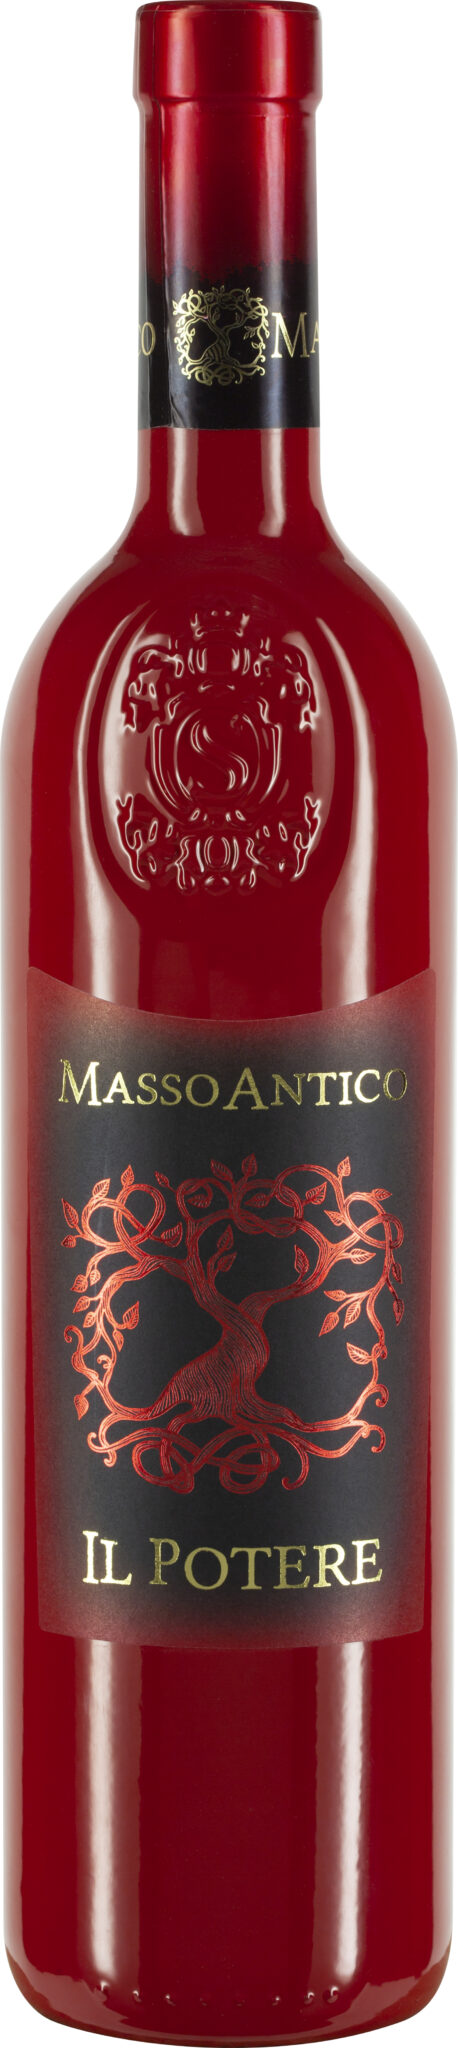 Masso Antico Il | Puglia Rosso Potere IGT der-schmeckt-mir